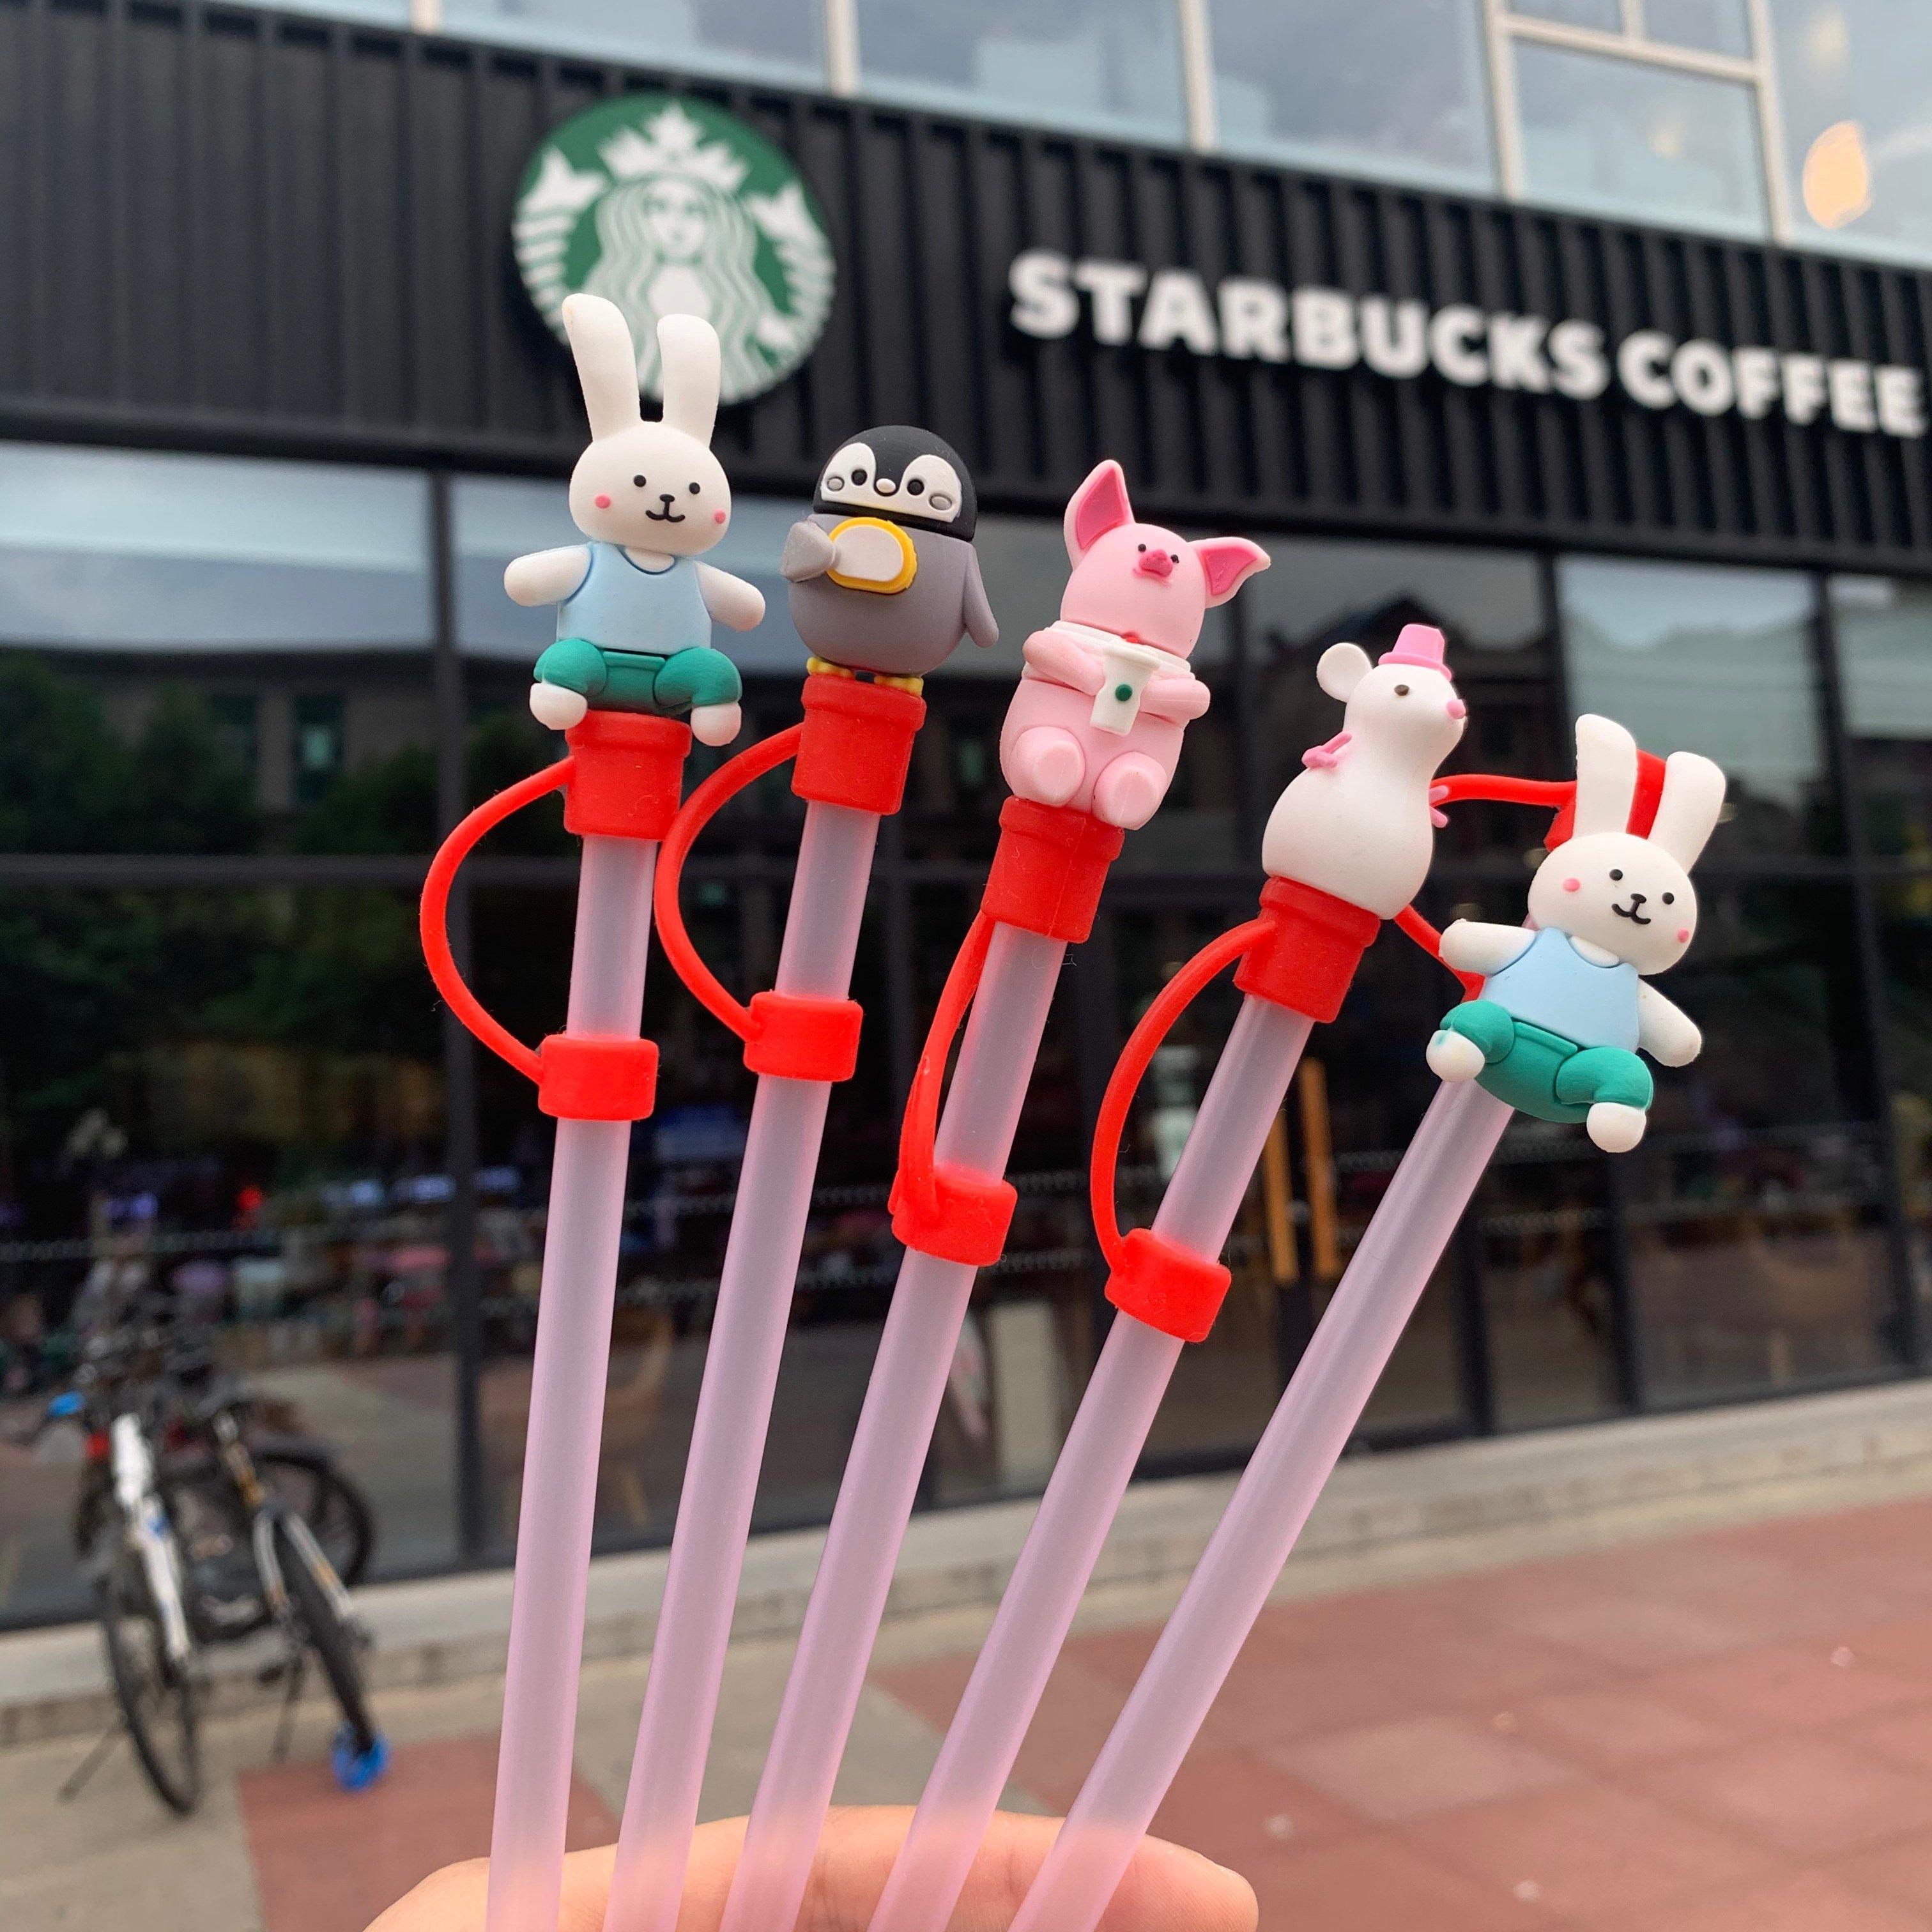 Universal Straw Toppers for Starbucks Straws - Yvonne12785